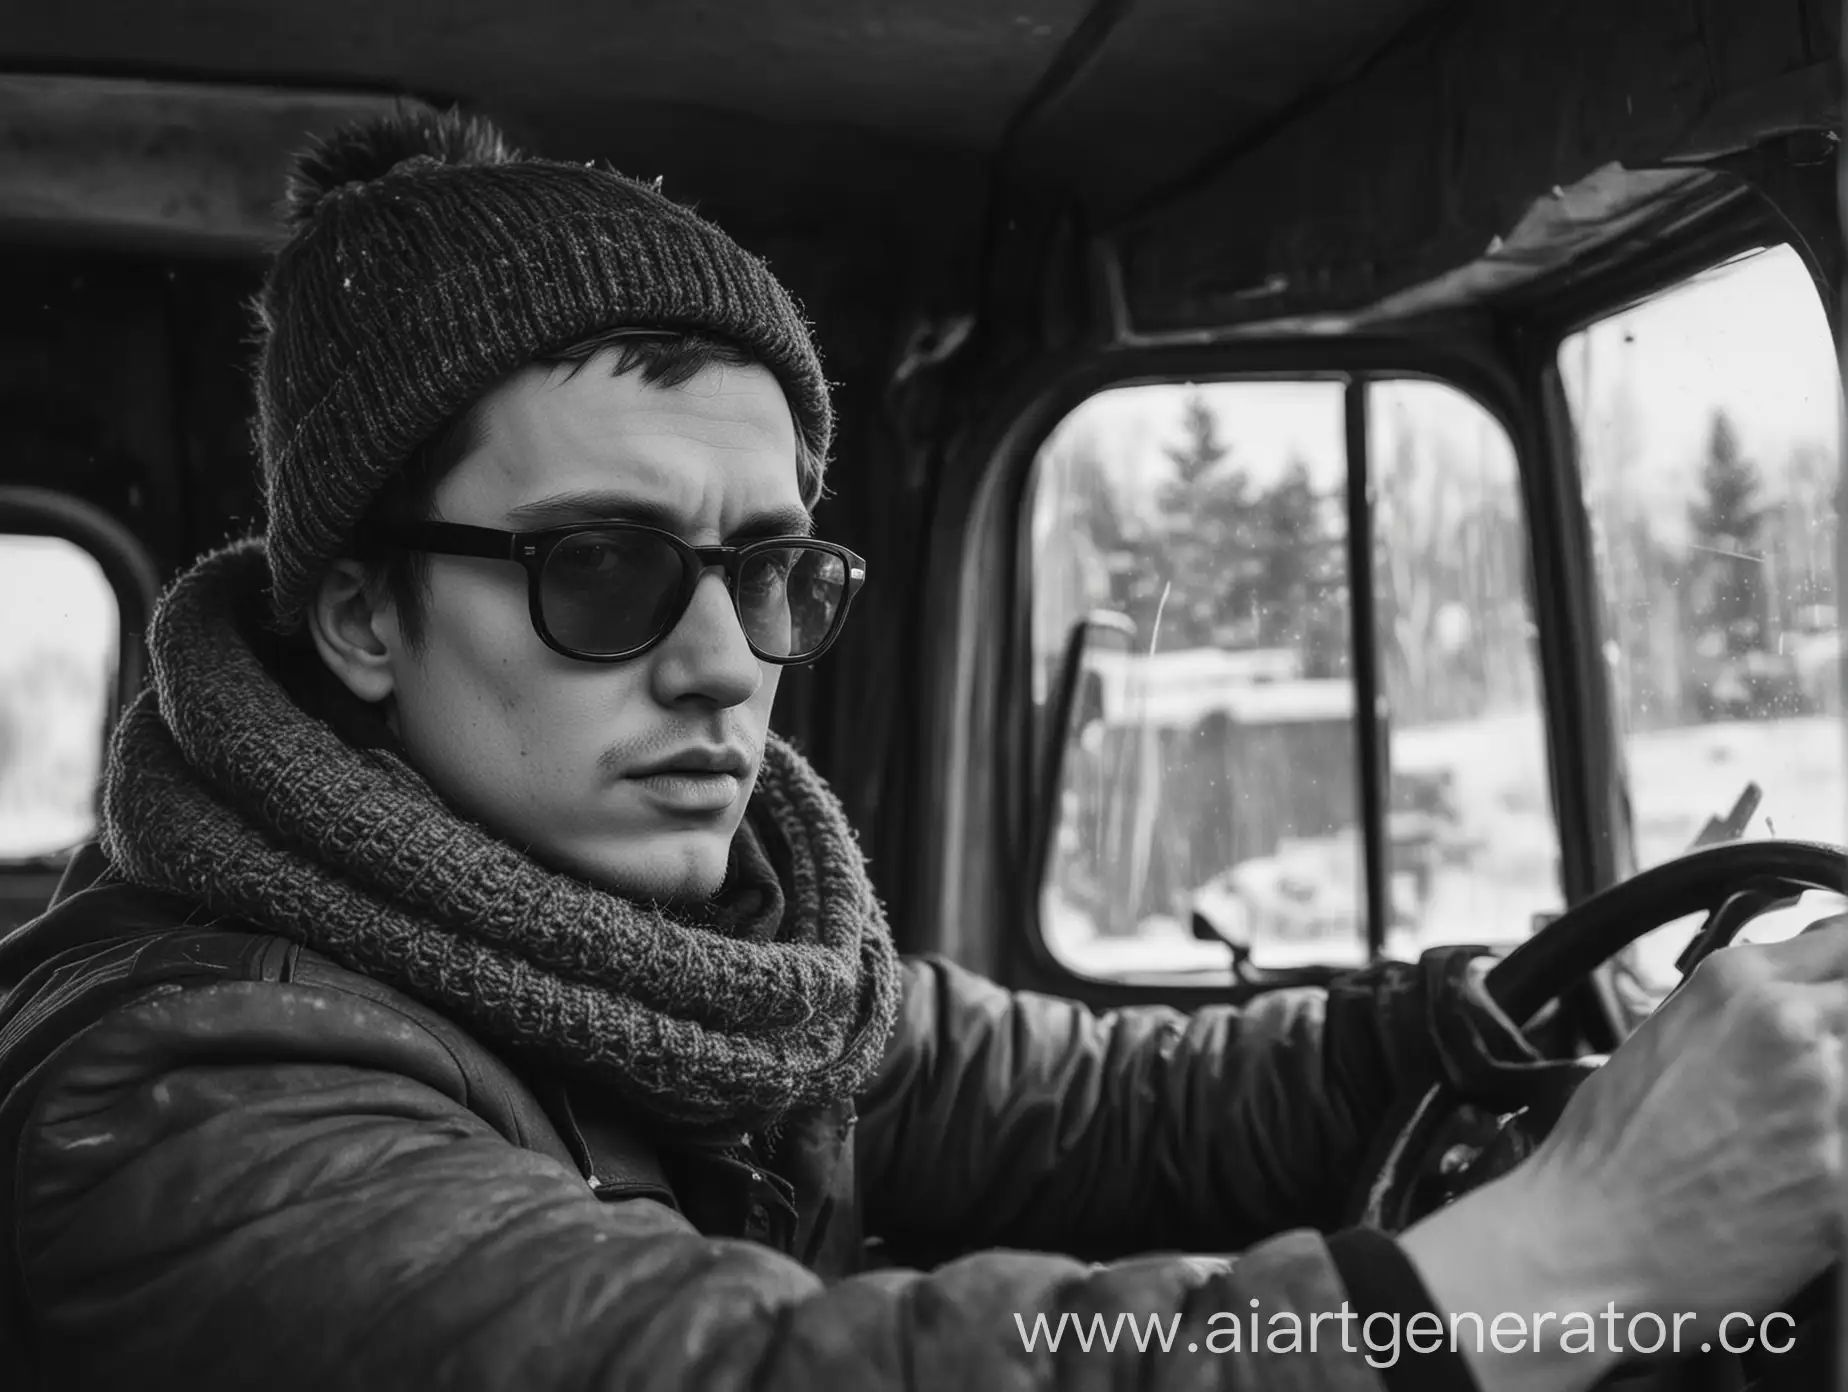 Russian-Punk-Rock-Singer-Egor-Letov-Driving-Truck-in-Winter-Sadness